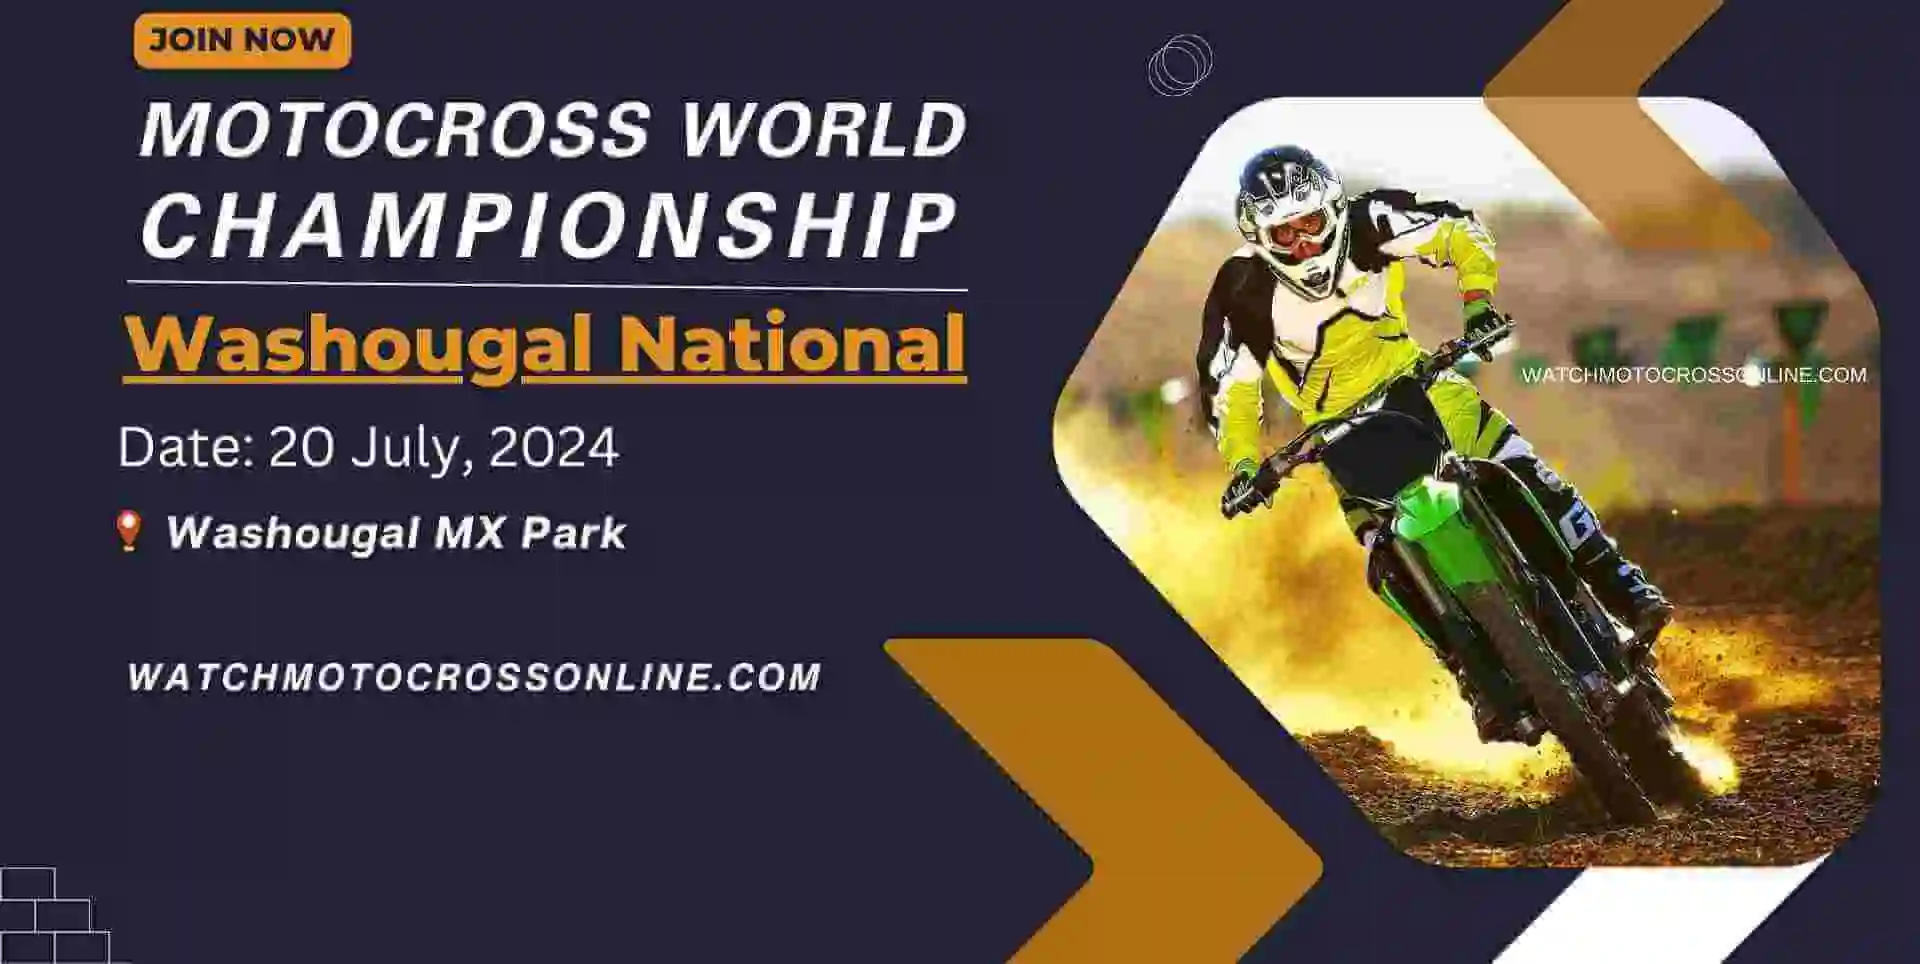 Washougal National Motocross Live Stream